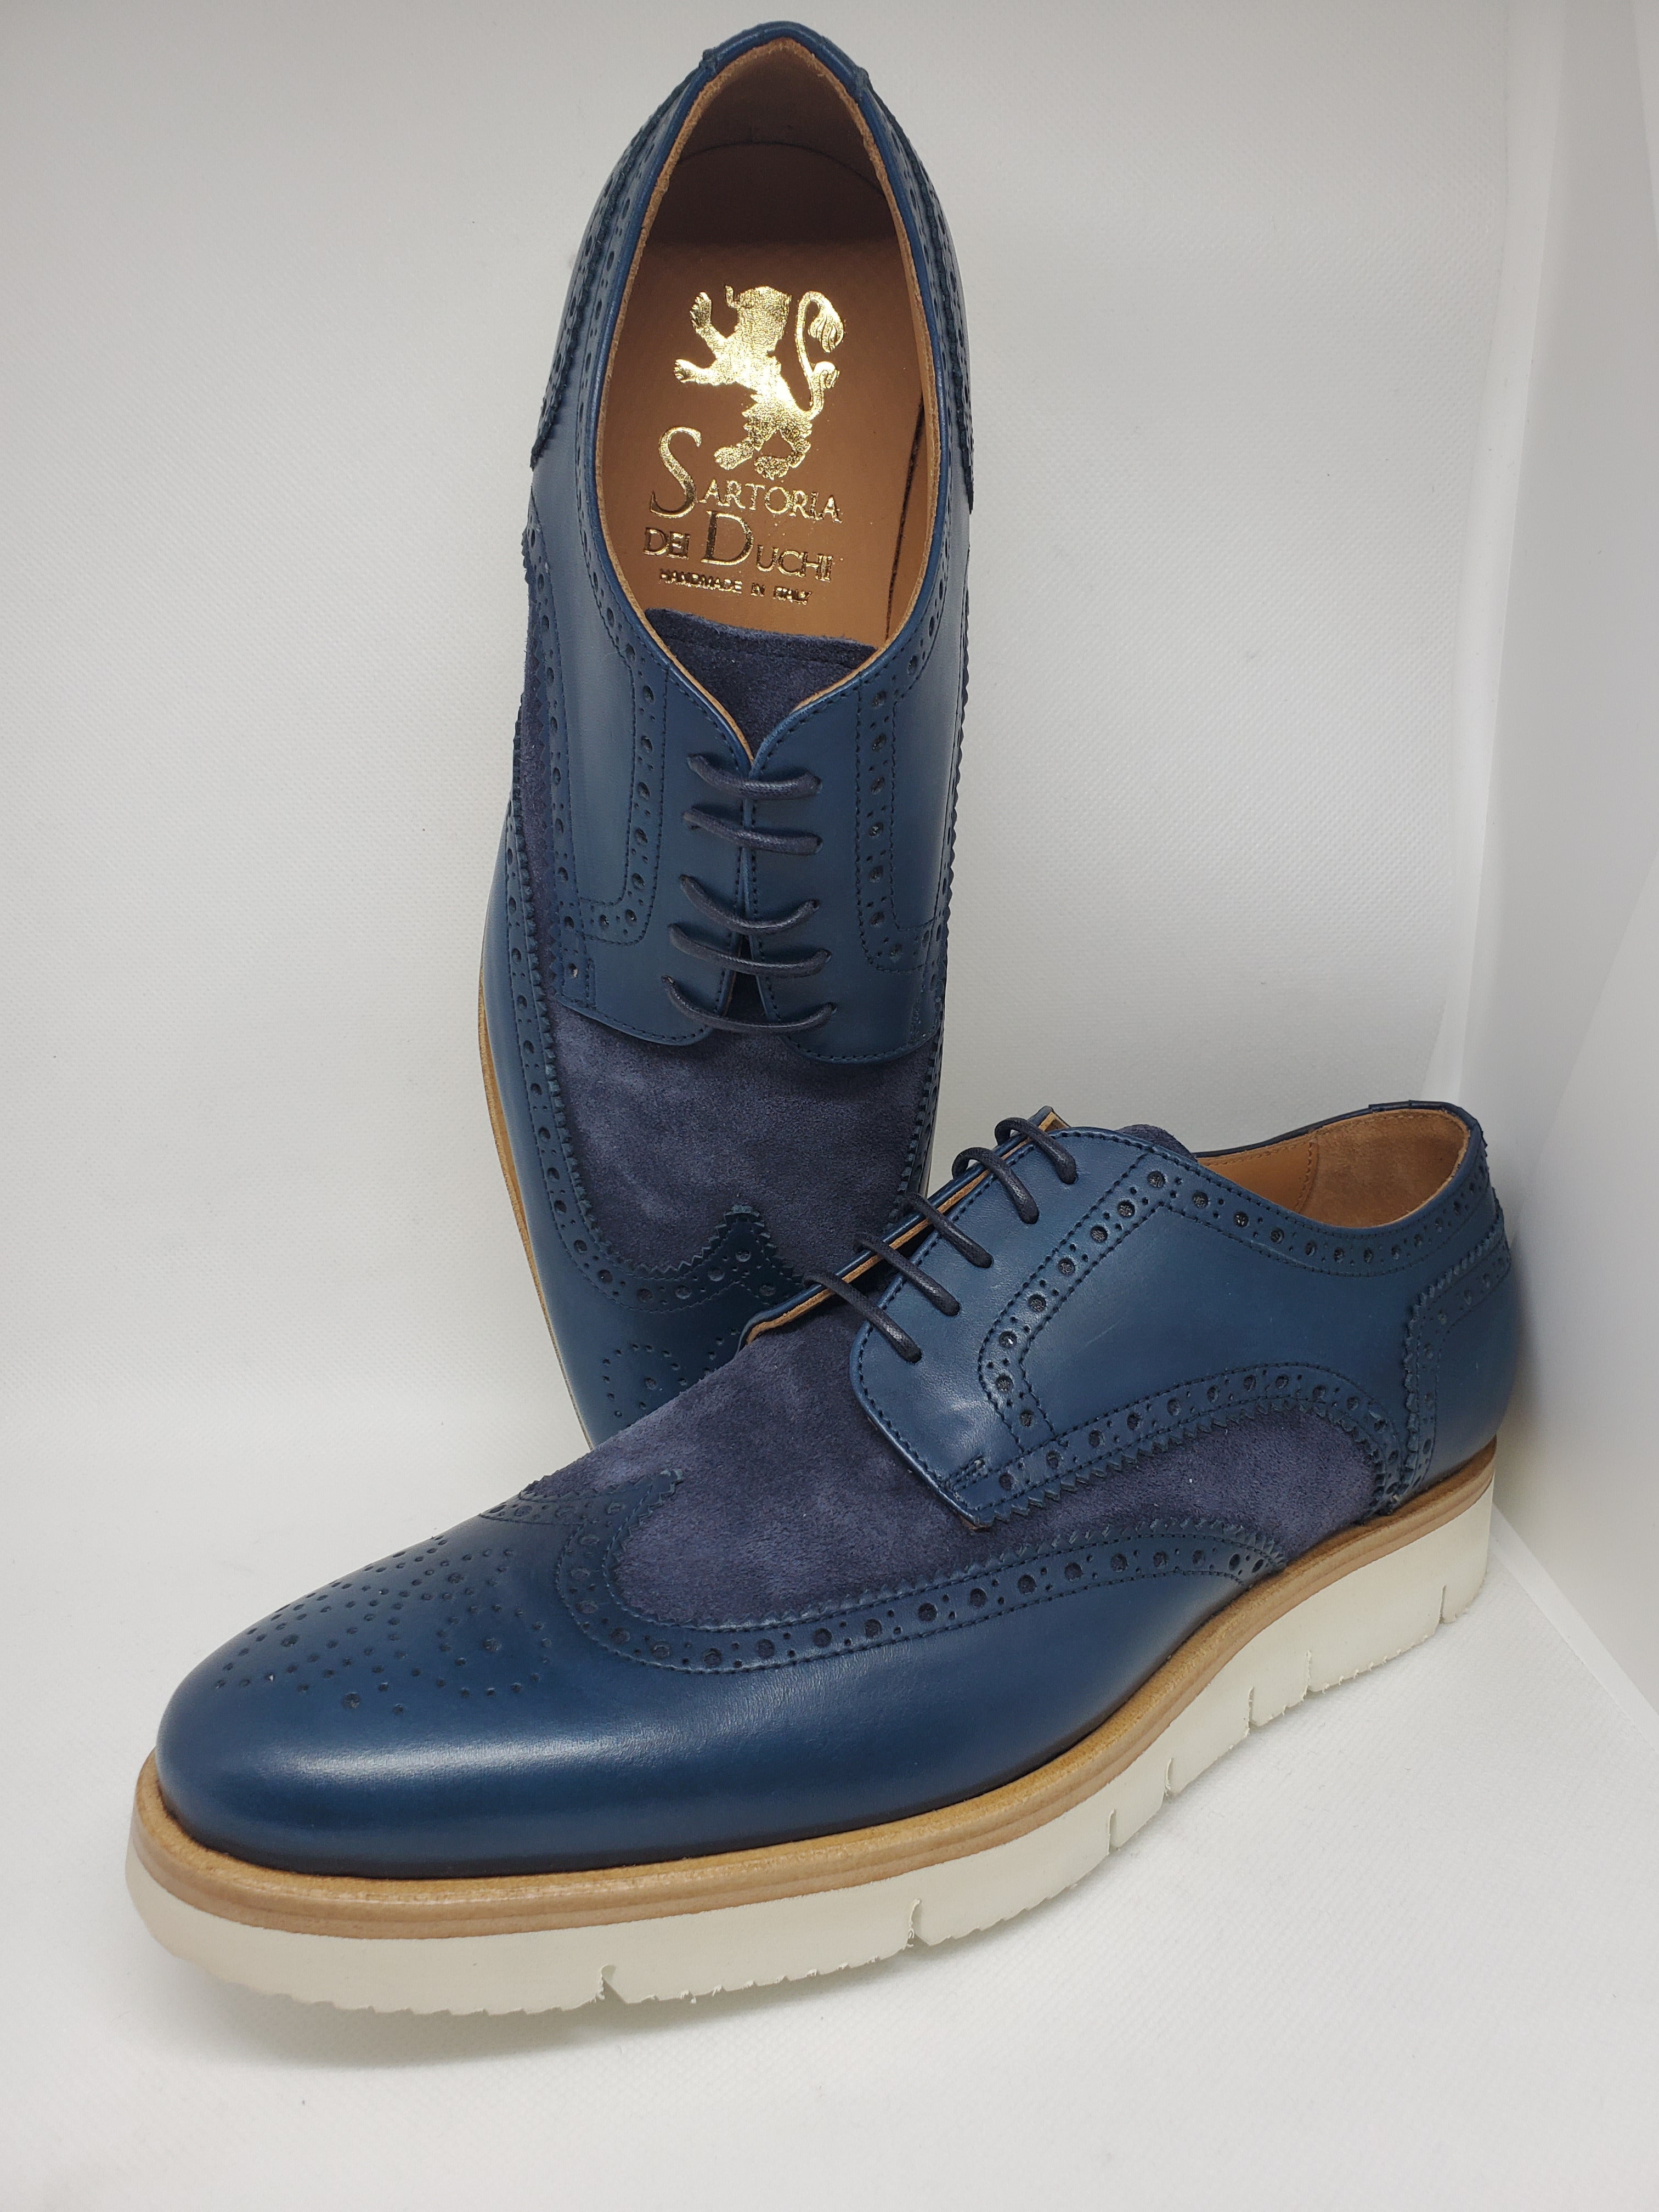 Handmade Mens Old English Brown Oxford Shoes, Men Brown Dress Shoes | eBay